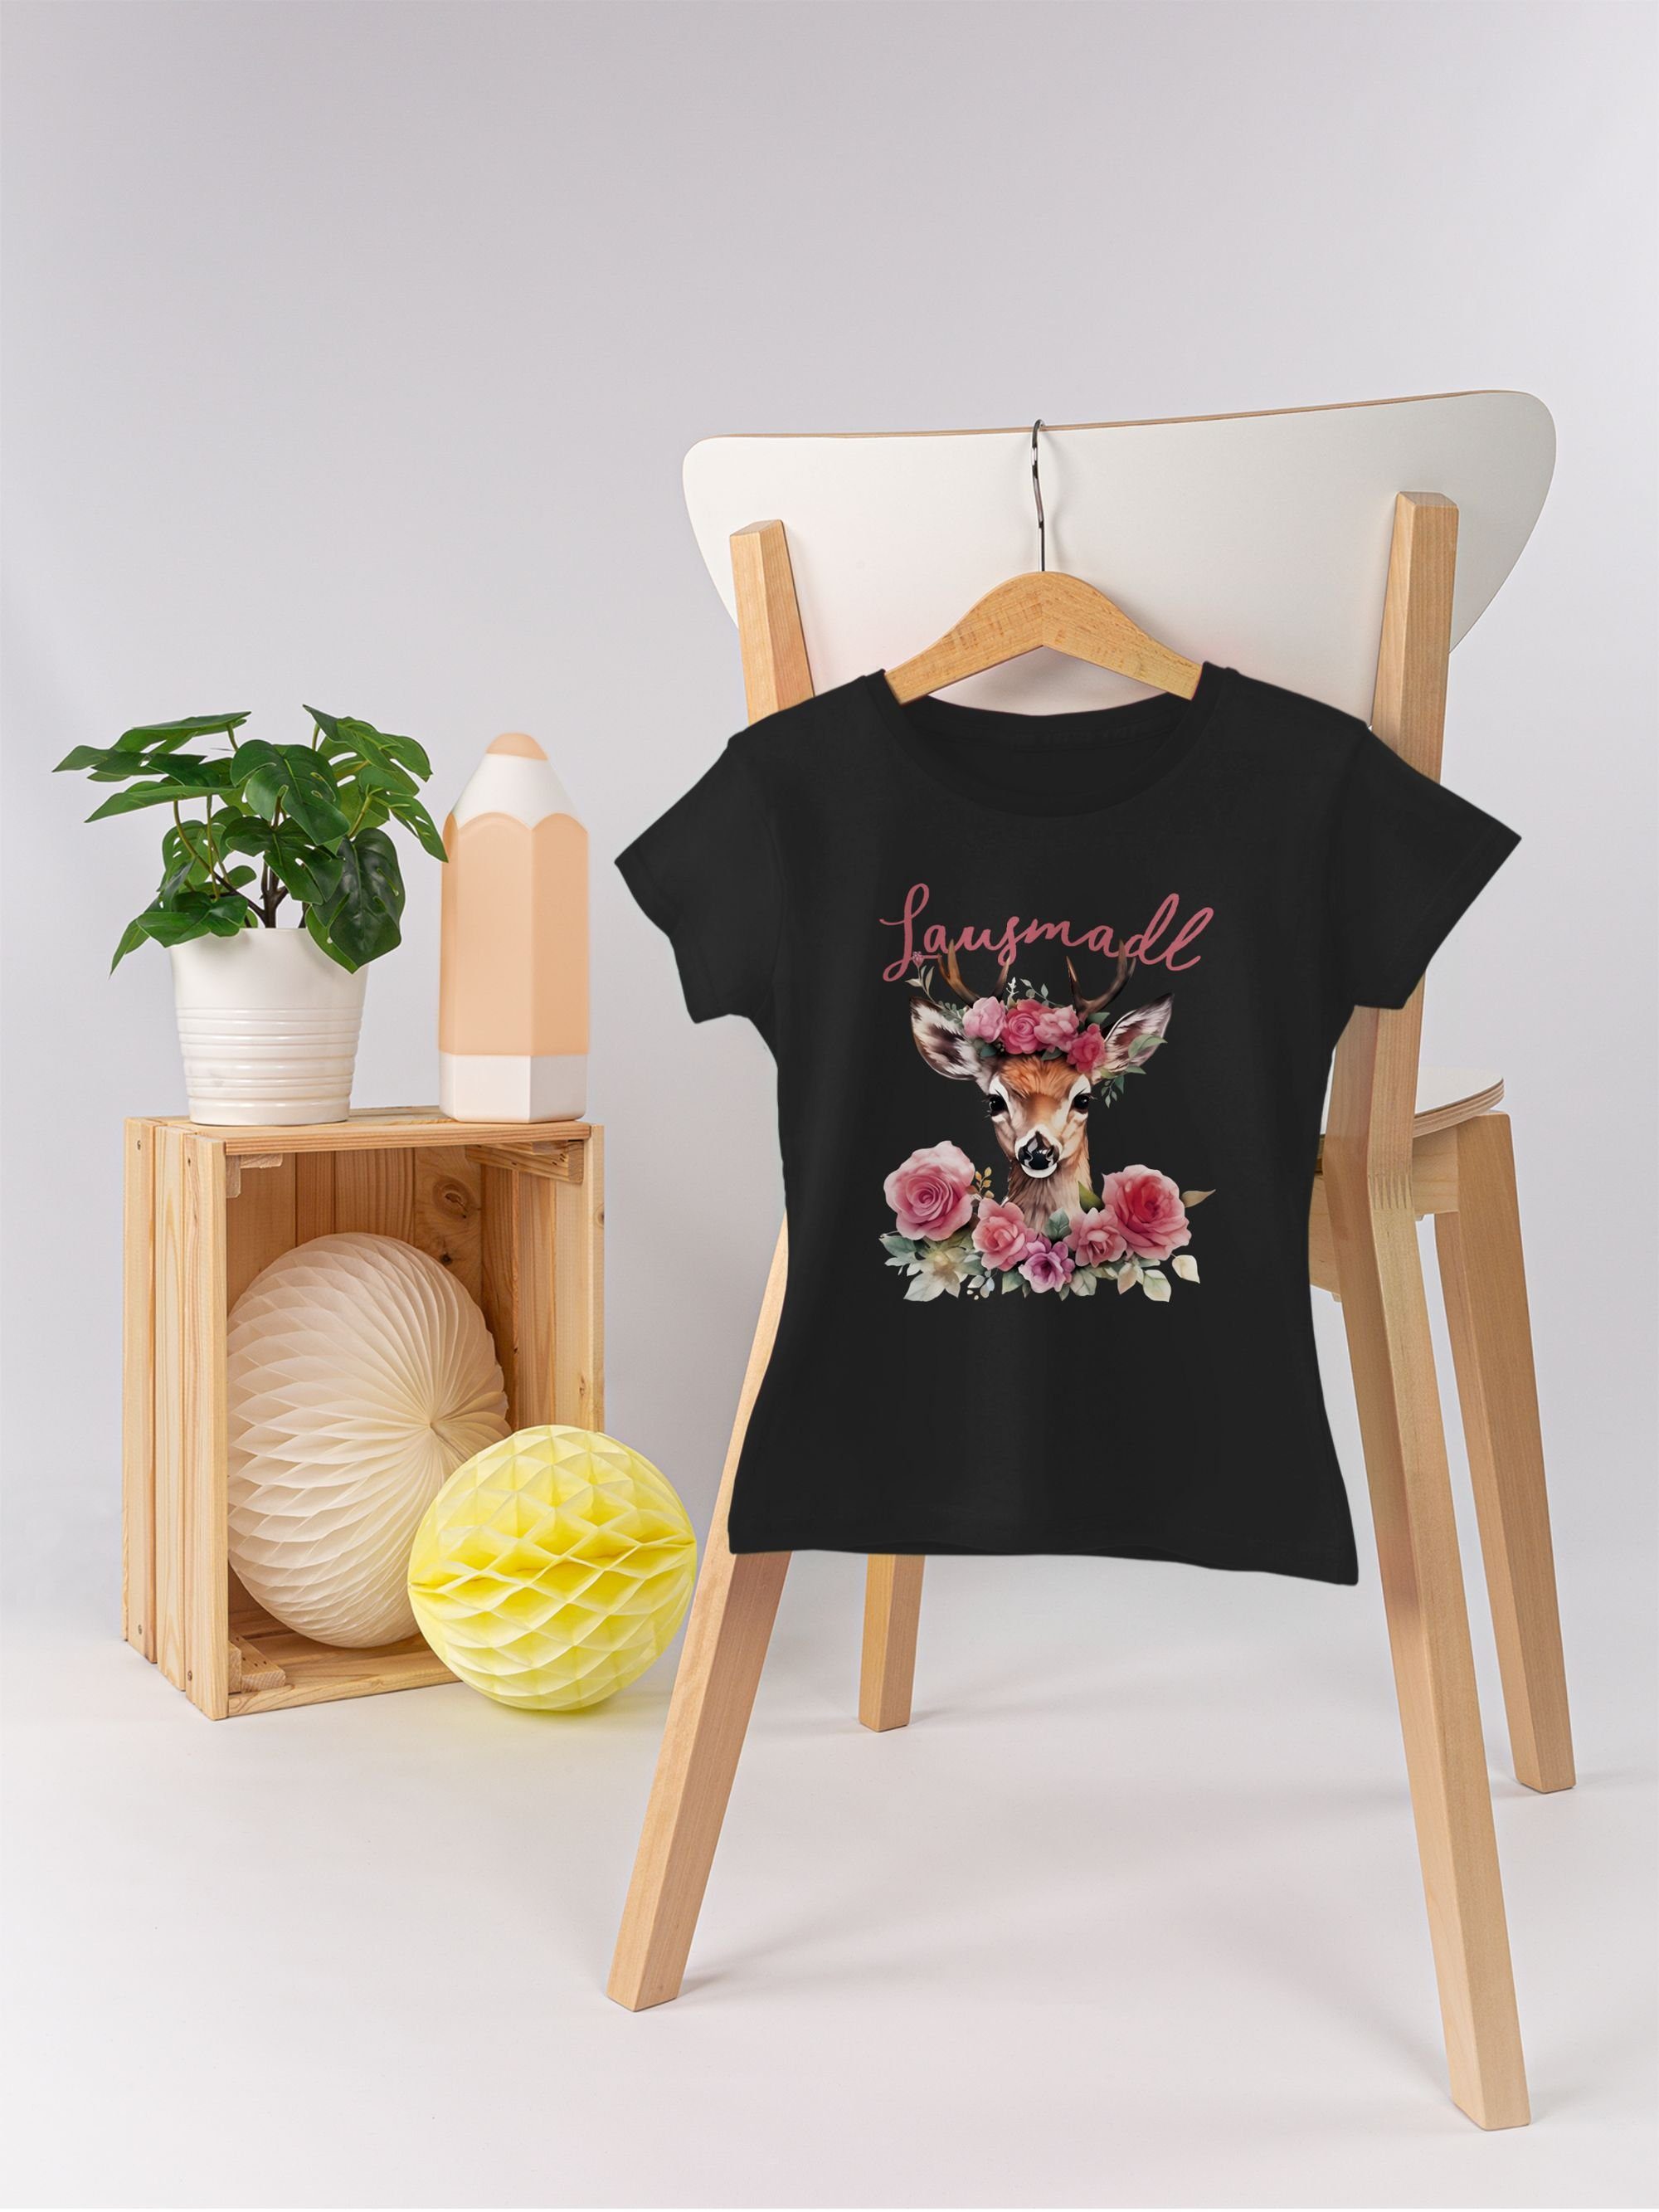 Shirtracer T-Shirt Lausmadl Freches 2 Lausmädchen Outfit Kinder - Mode Mädchen Lausemädchen Lousy für Reh Geweih Oktoberfest Schwarz G